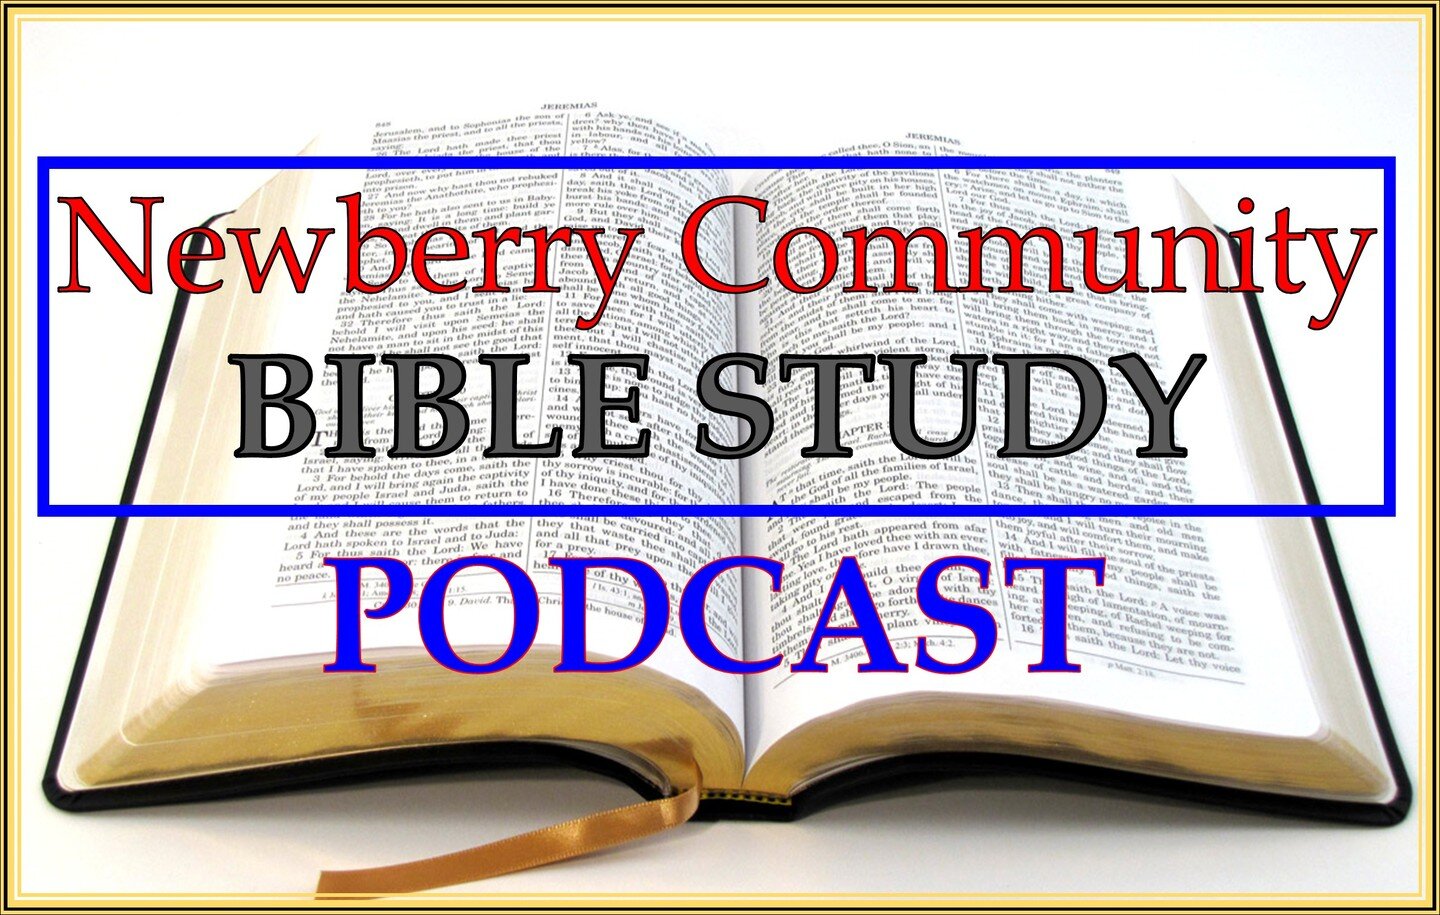 Lesson on John 1:14-18
https://newberrycommunitybiblestudy.substack.com/p/john-114-18-9122?sd=pf